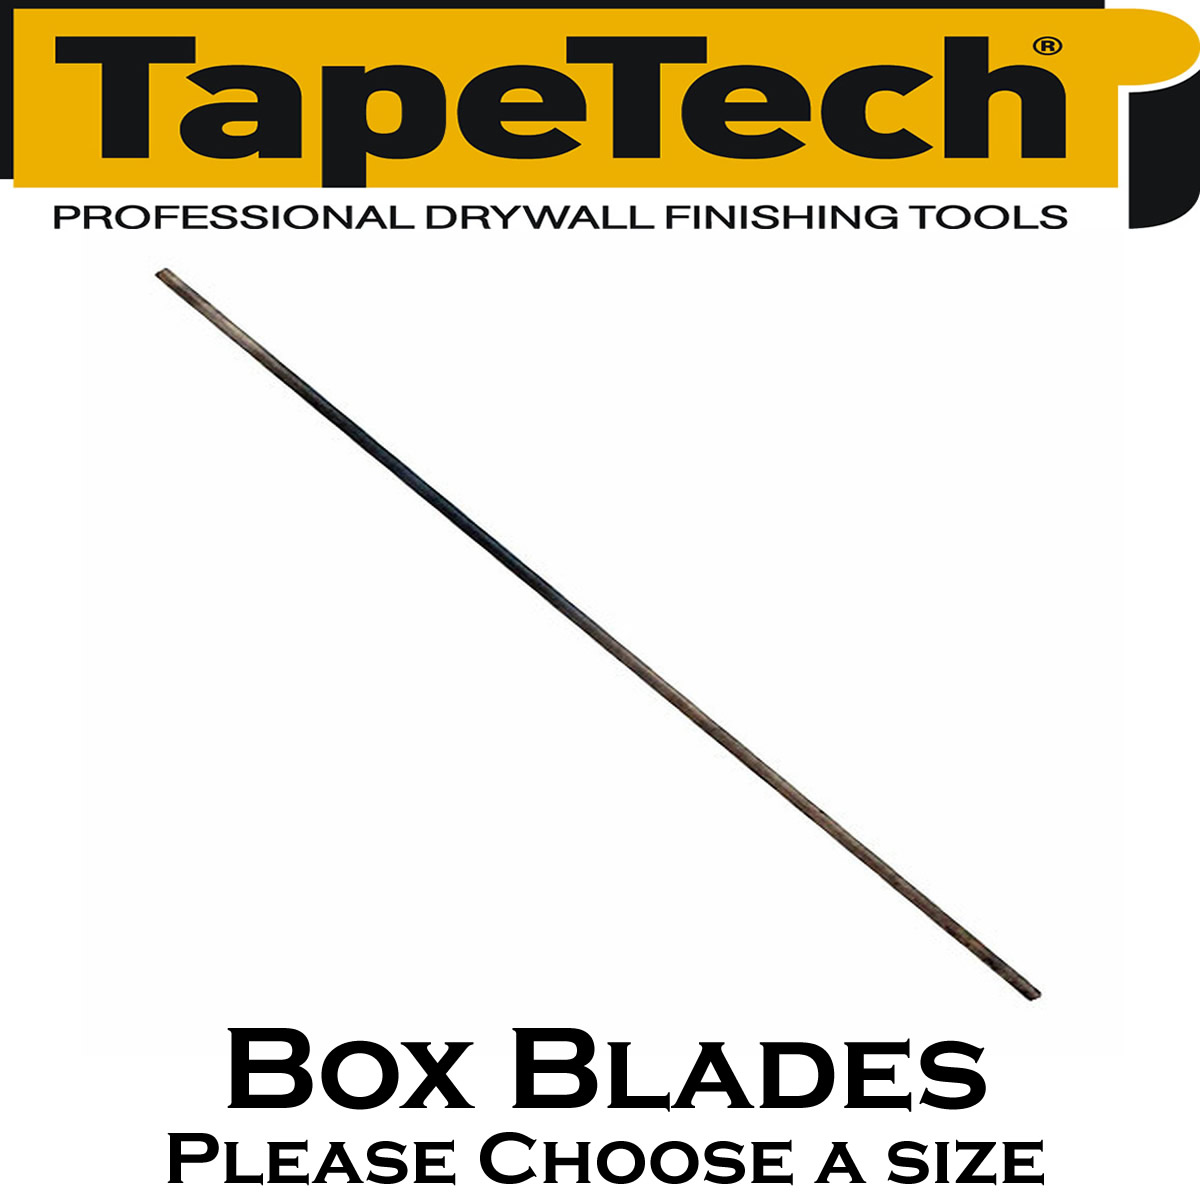 TapeTech Box Blades